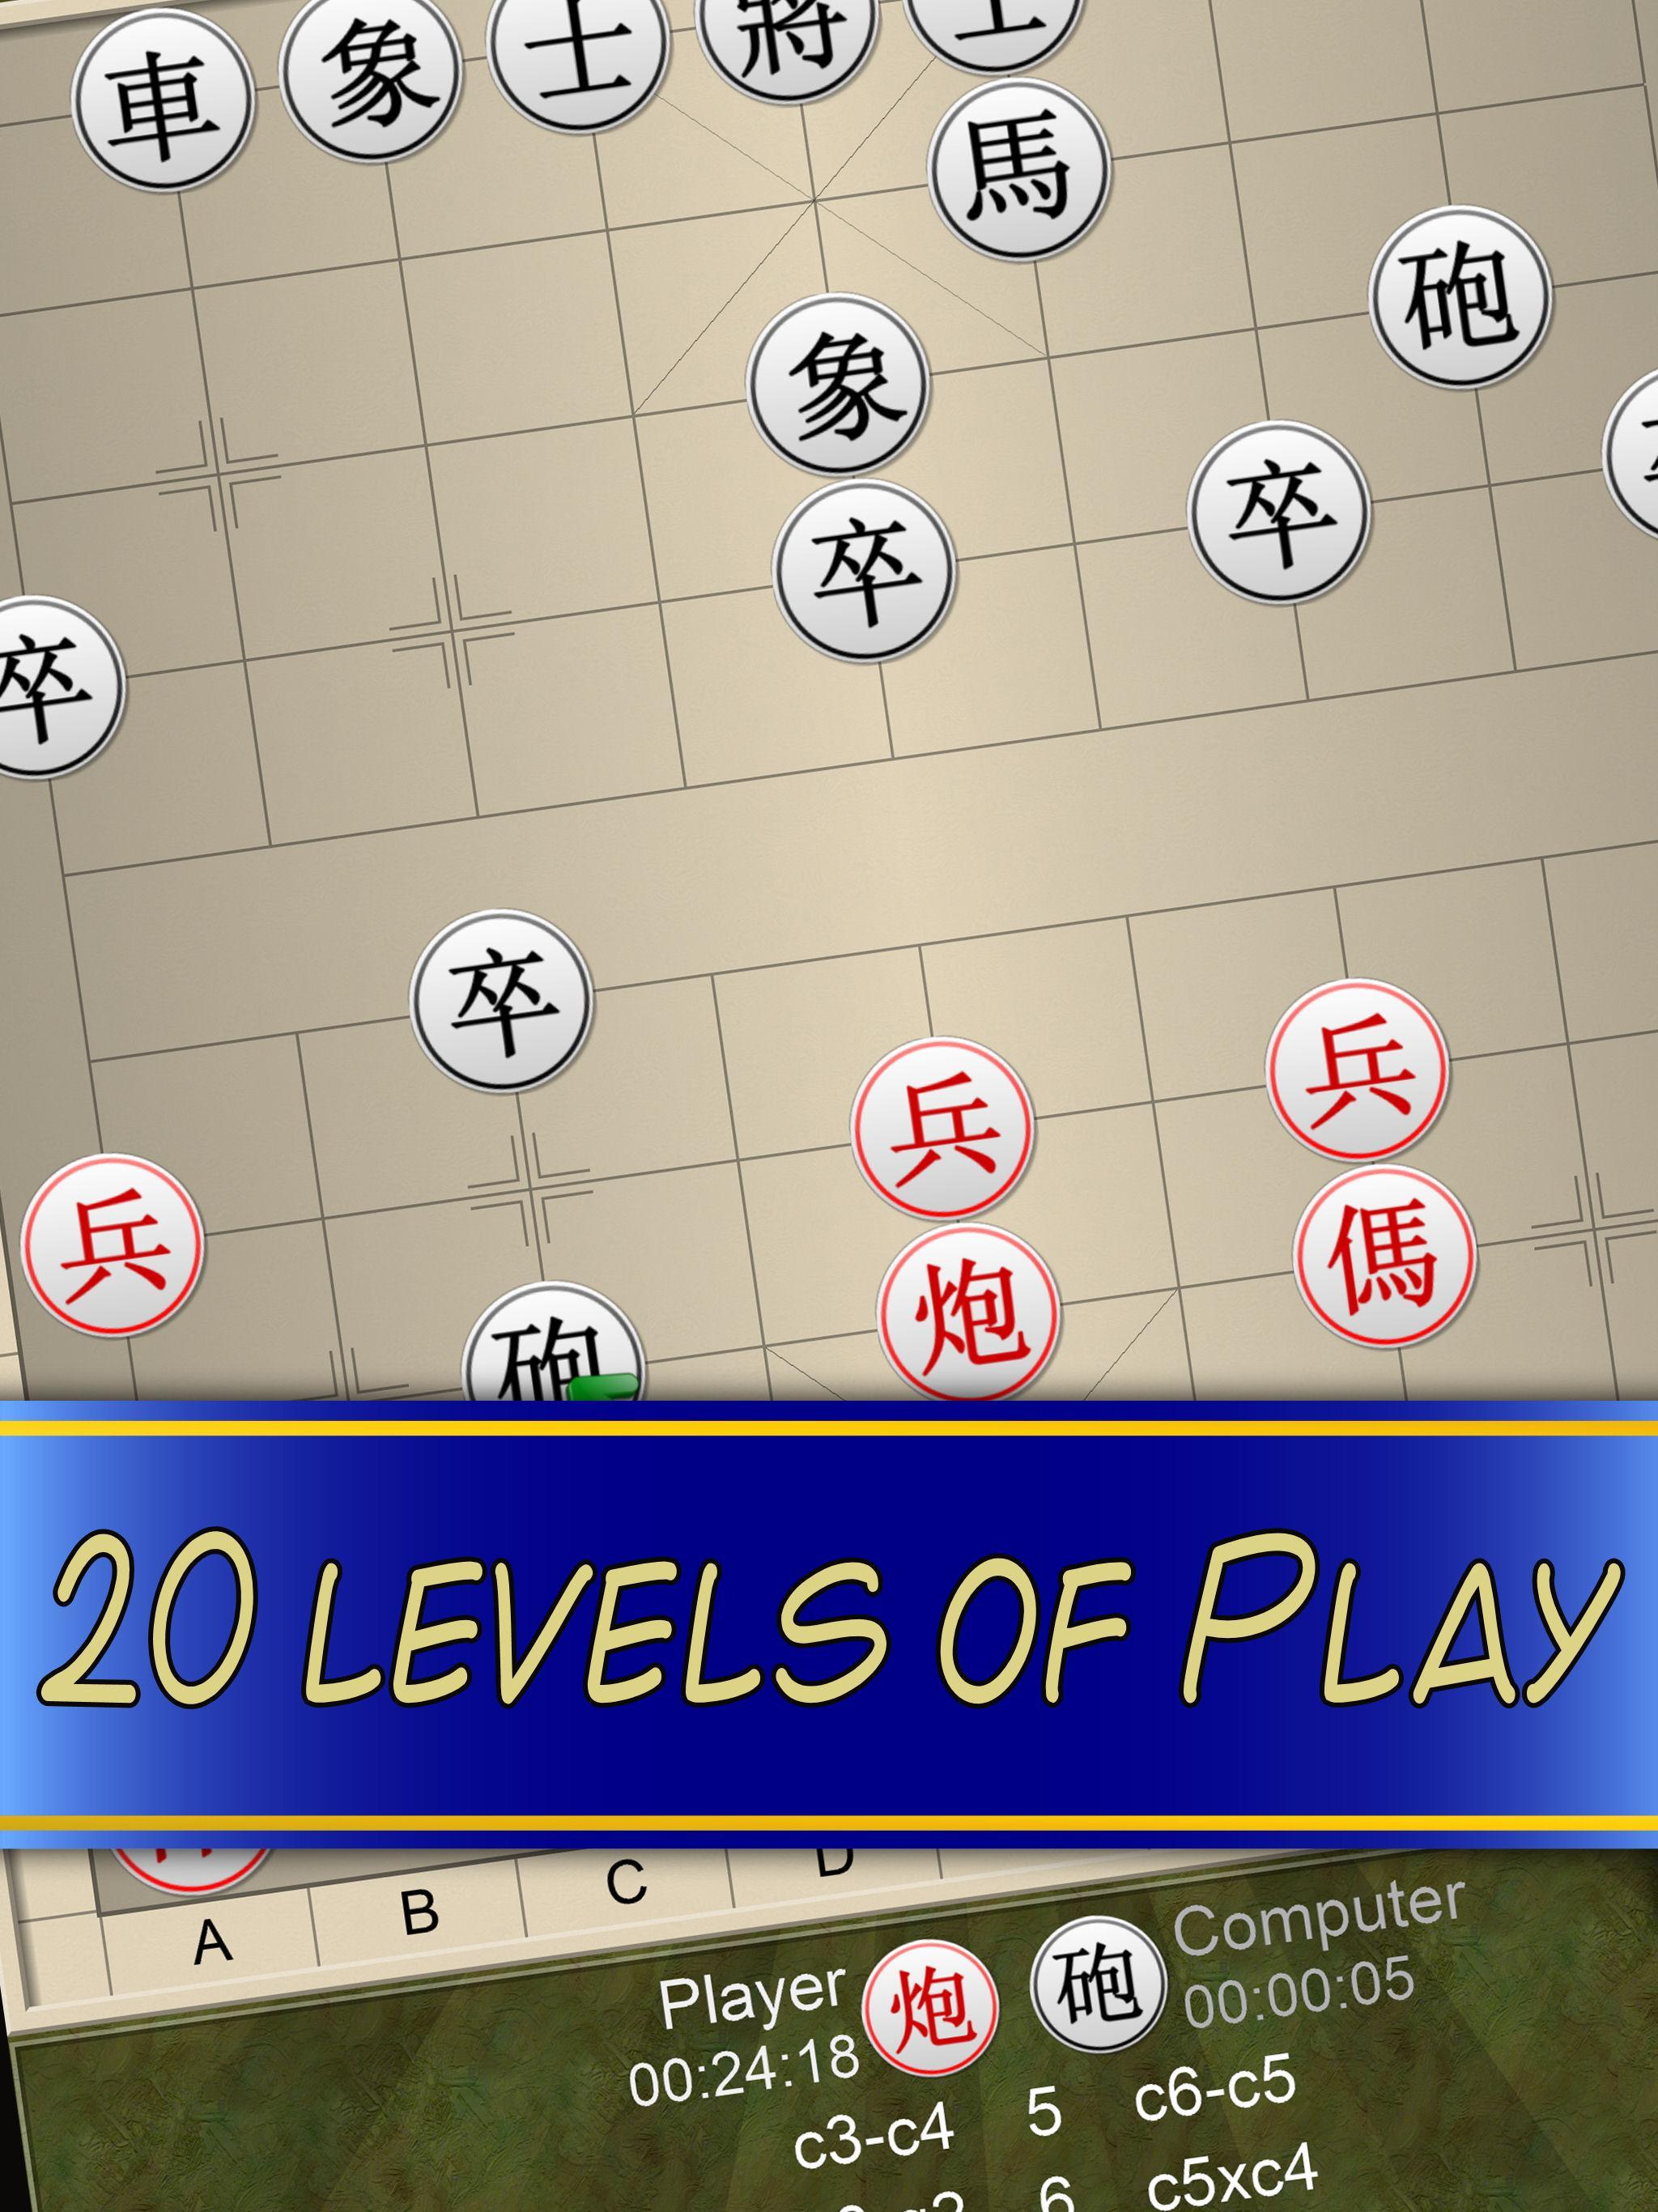 Chinese Chess V+, multiplayer Xiangqi board game 5.25.65 Screenshot 17